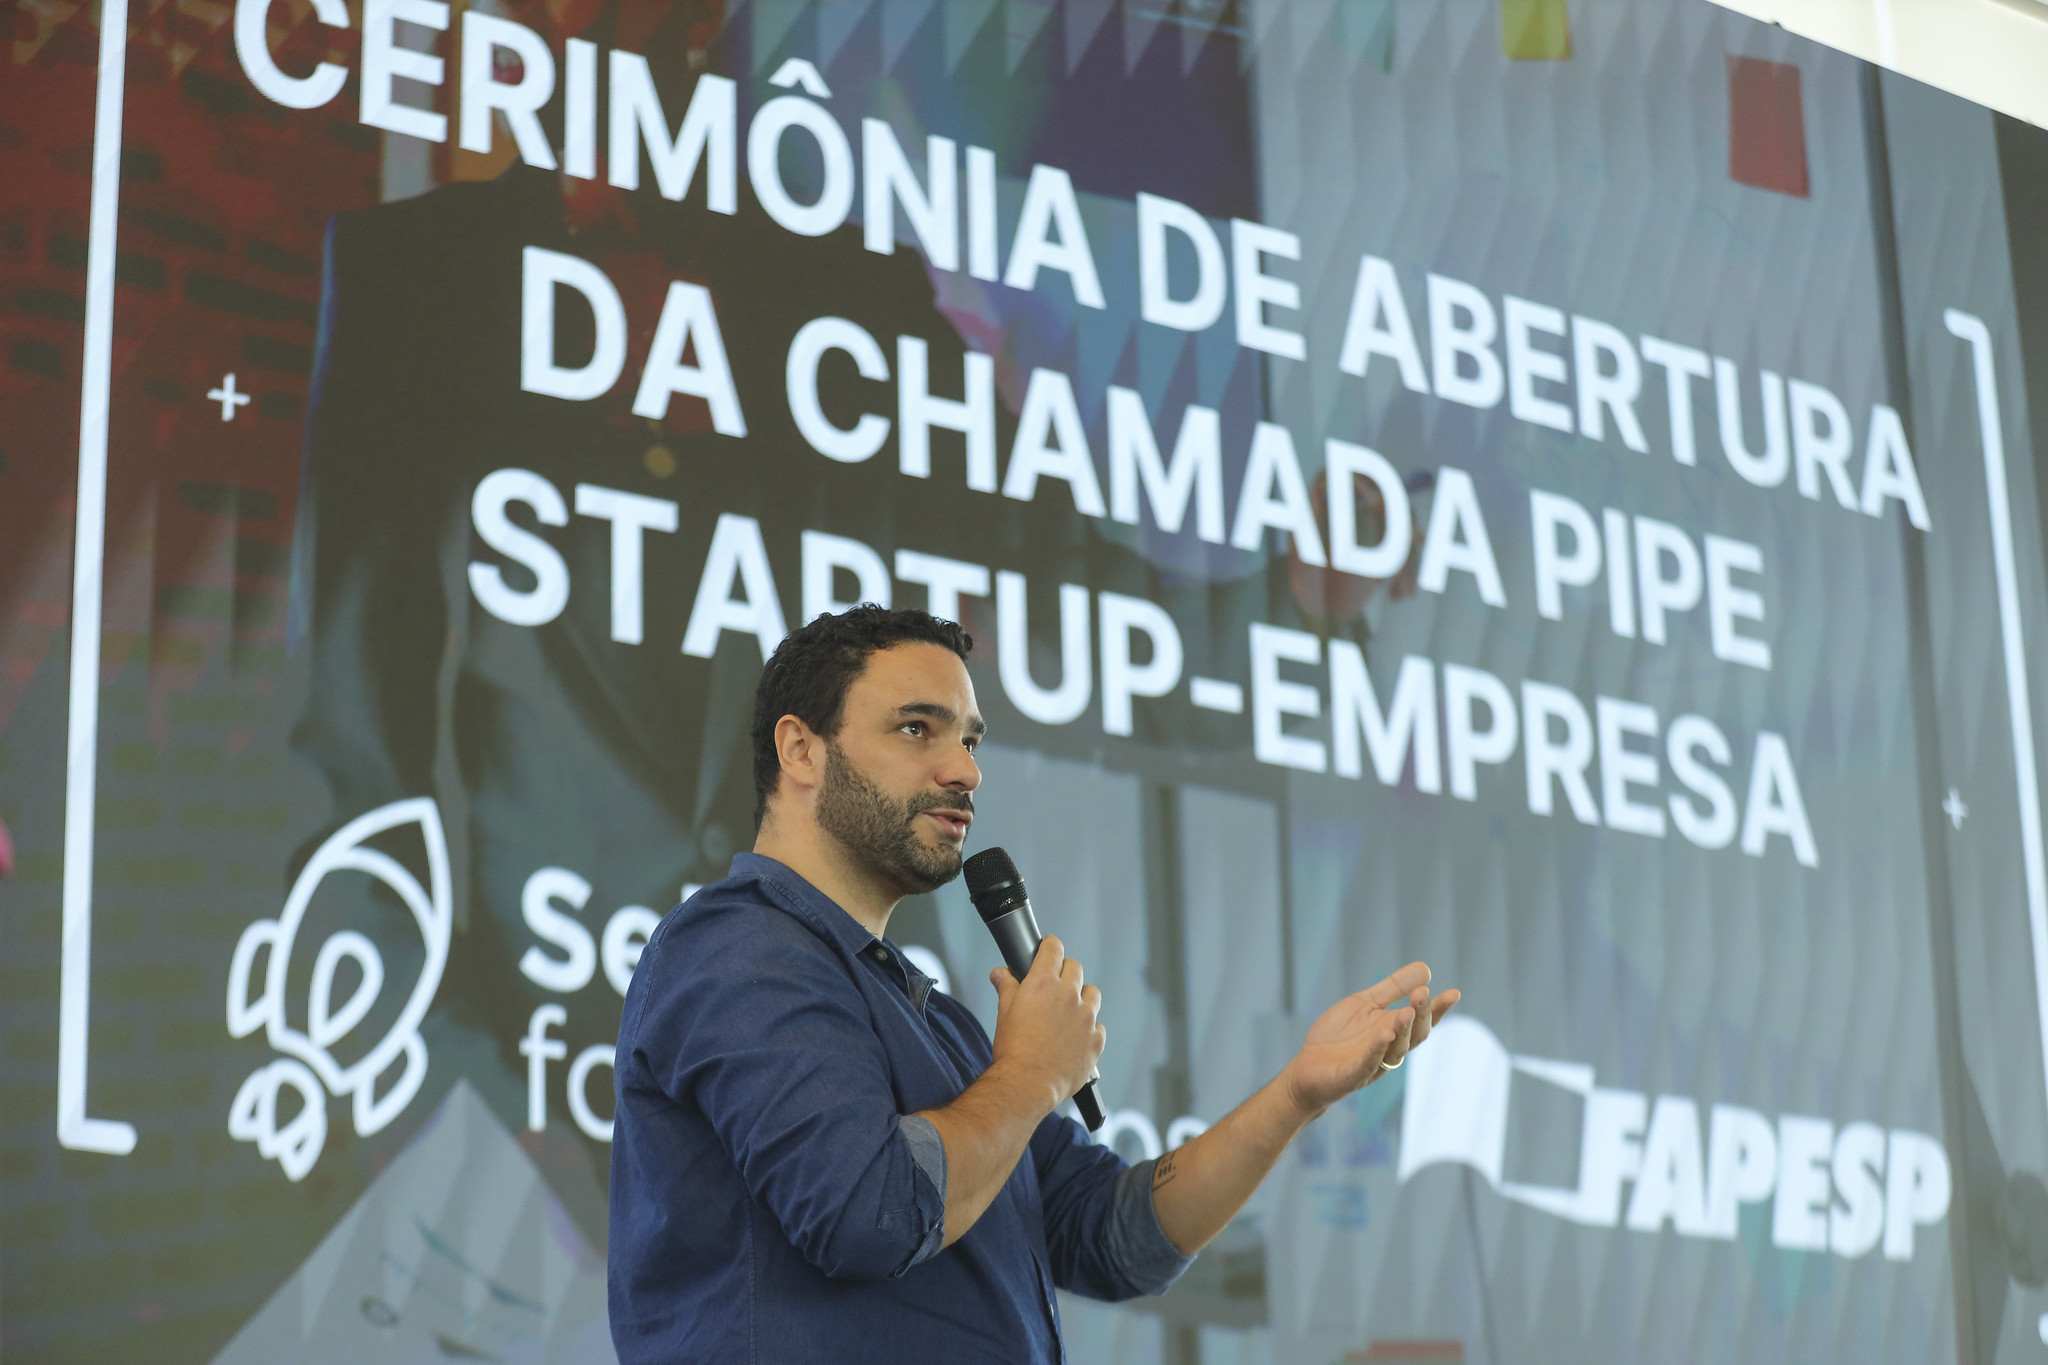 Michel Porcino, Sebrae for Startups